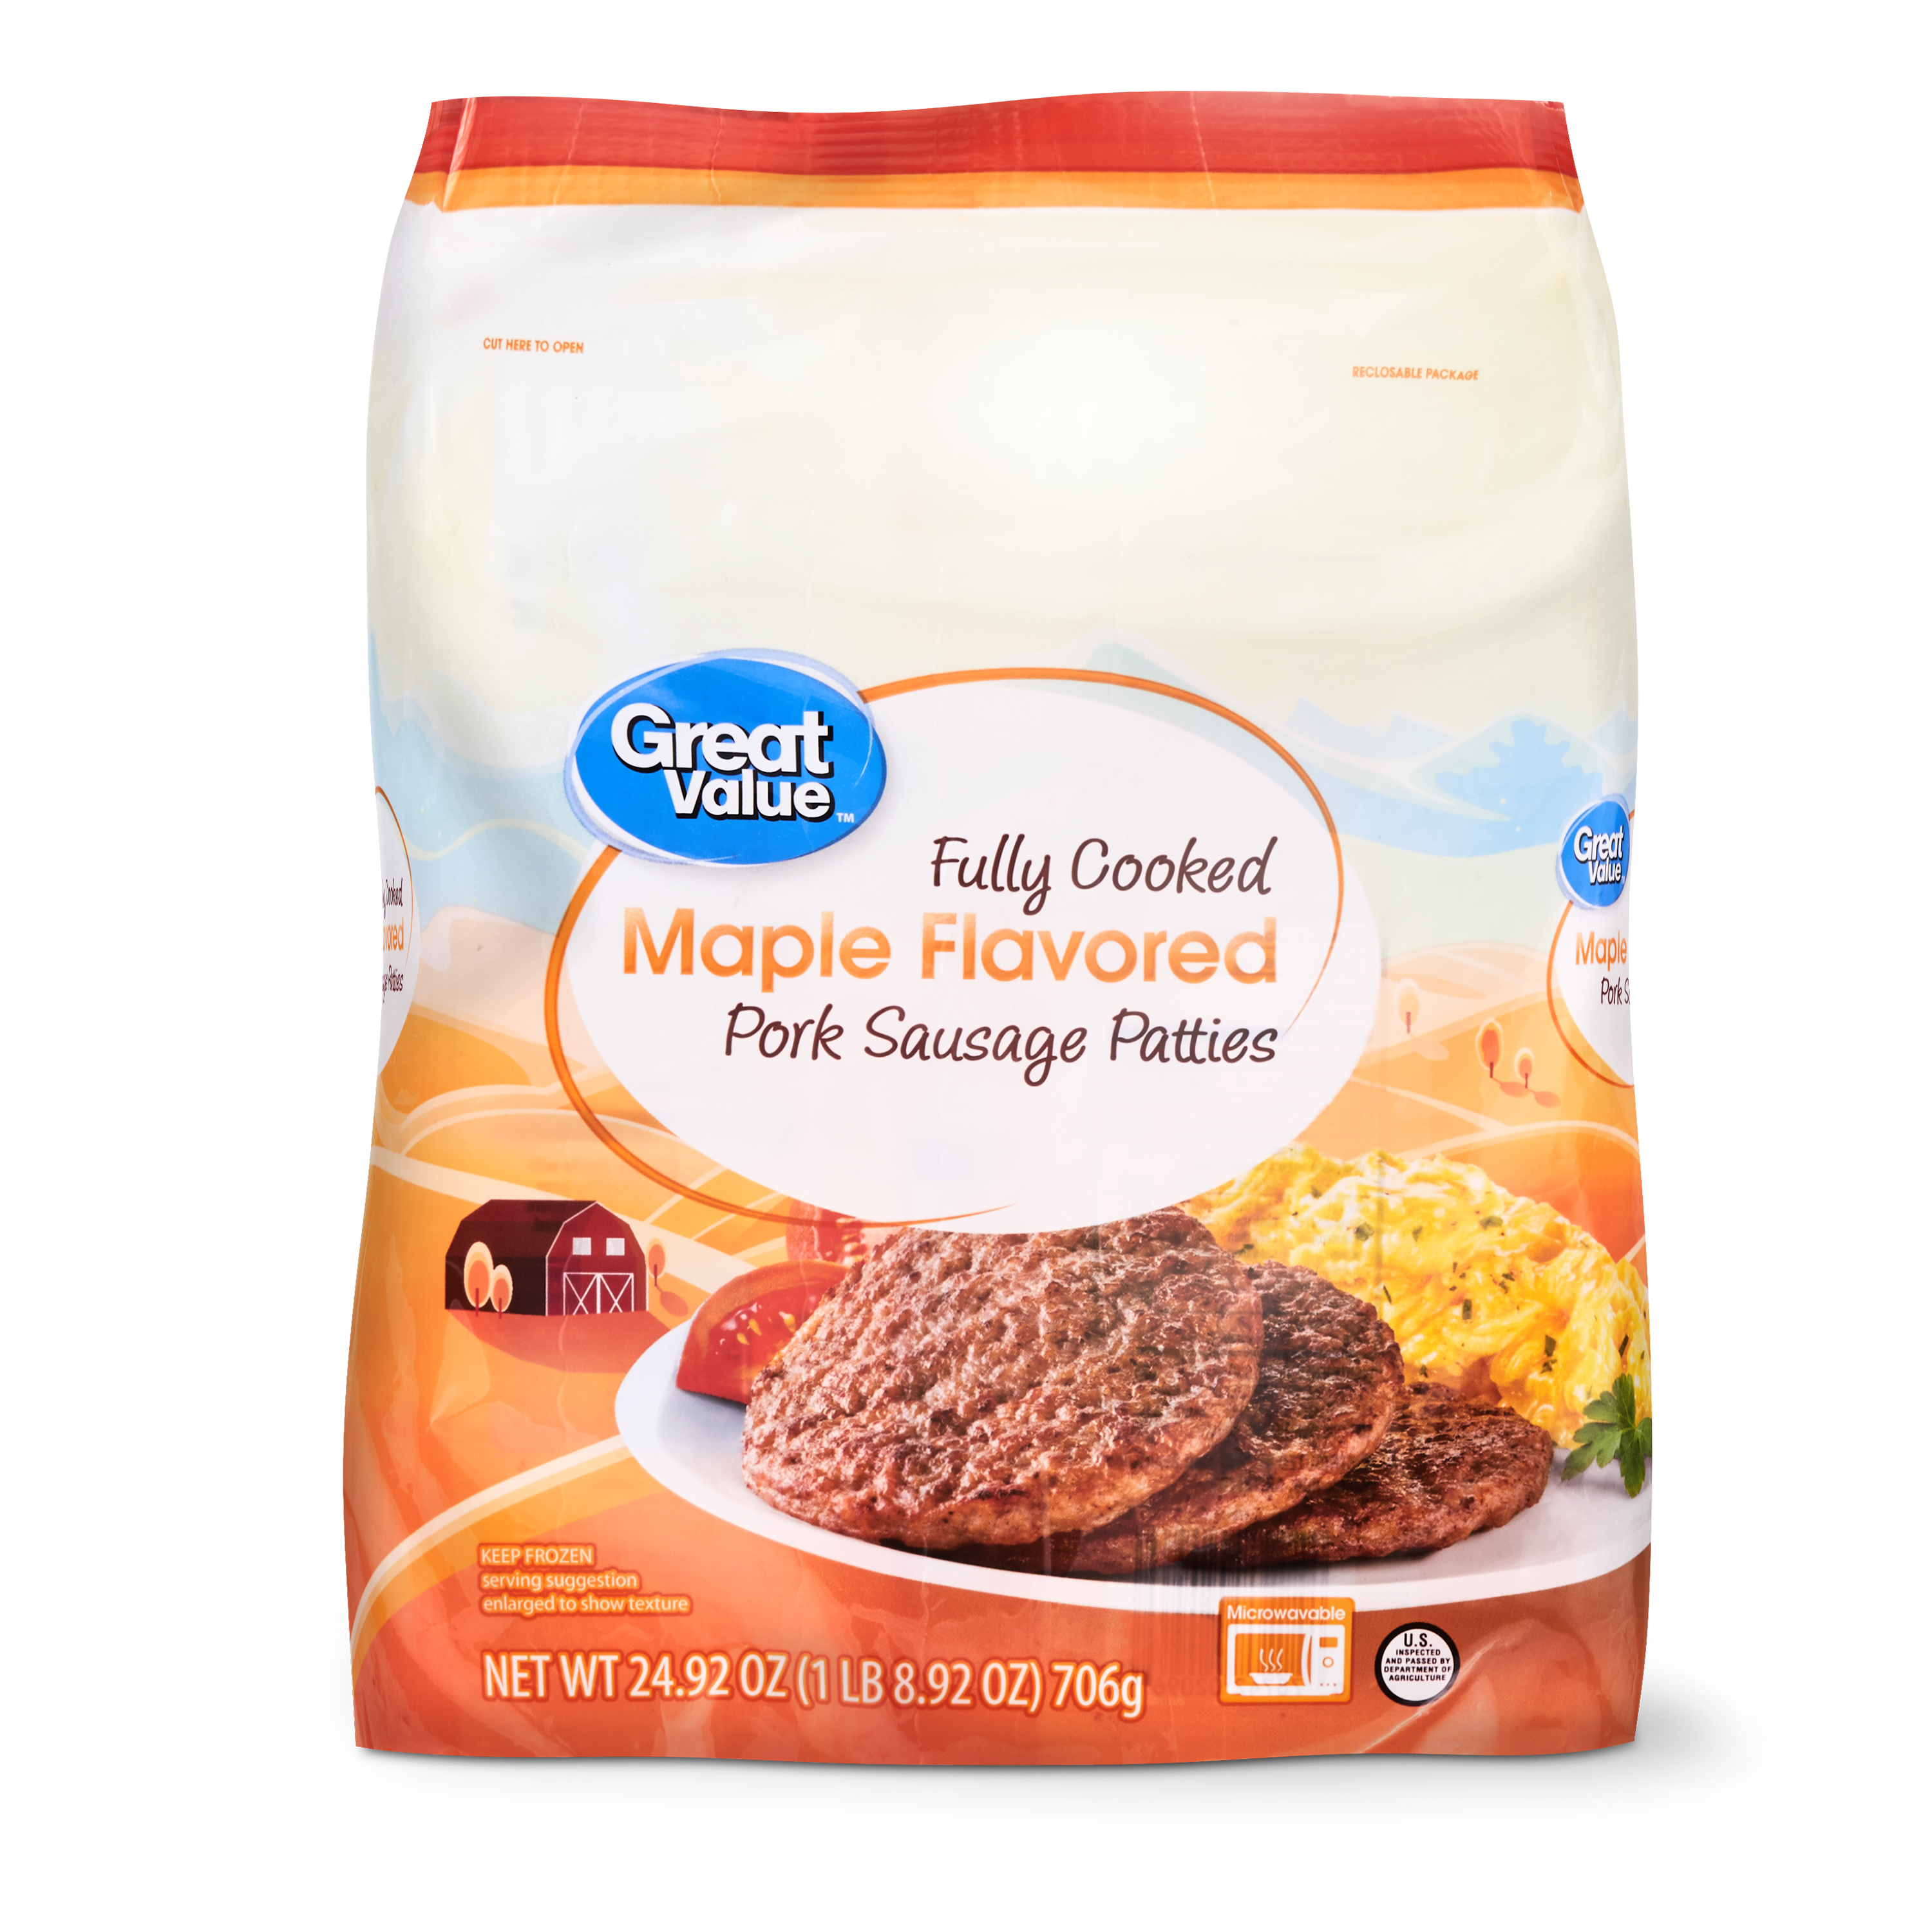 Great Value Maple Flavored Pork Sausage Patties, 24.92 Oz Image